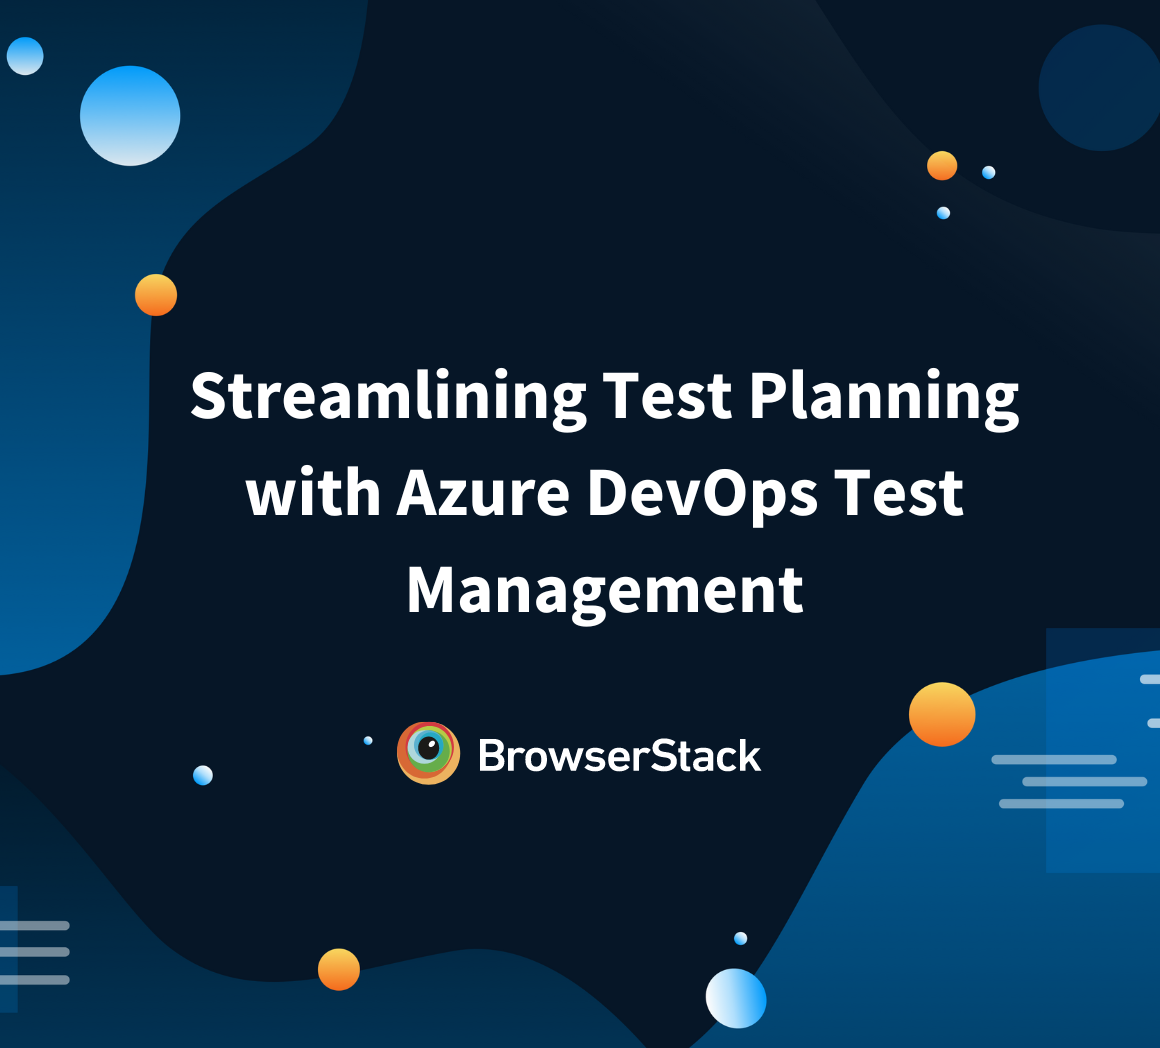 Streamlining Test Planning with Azure DevOps Test Management